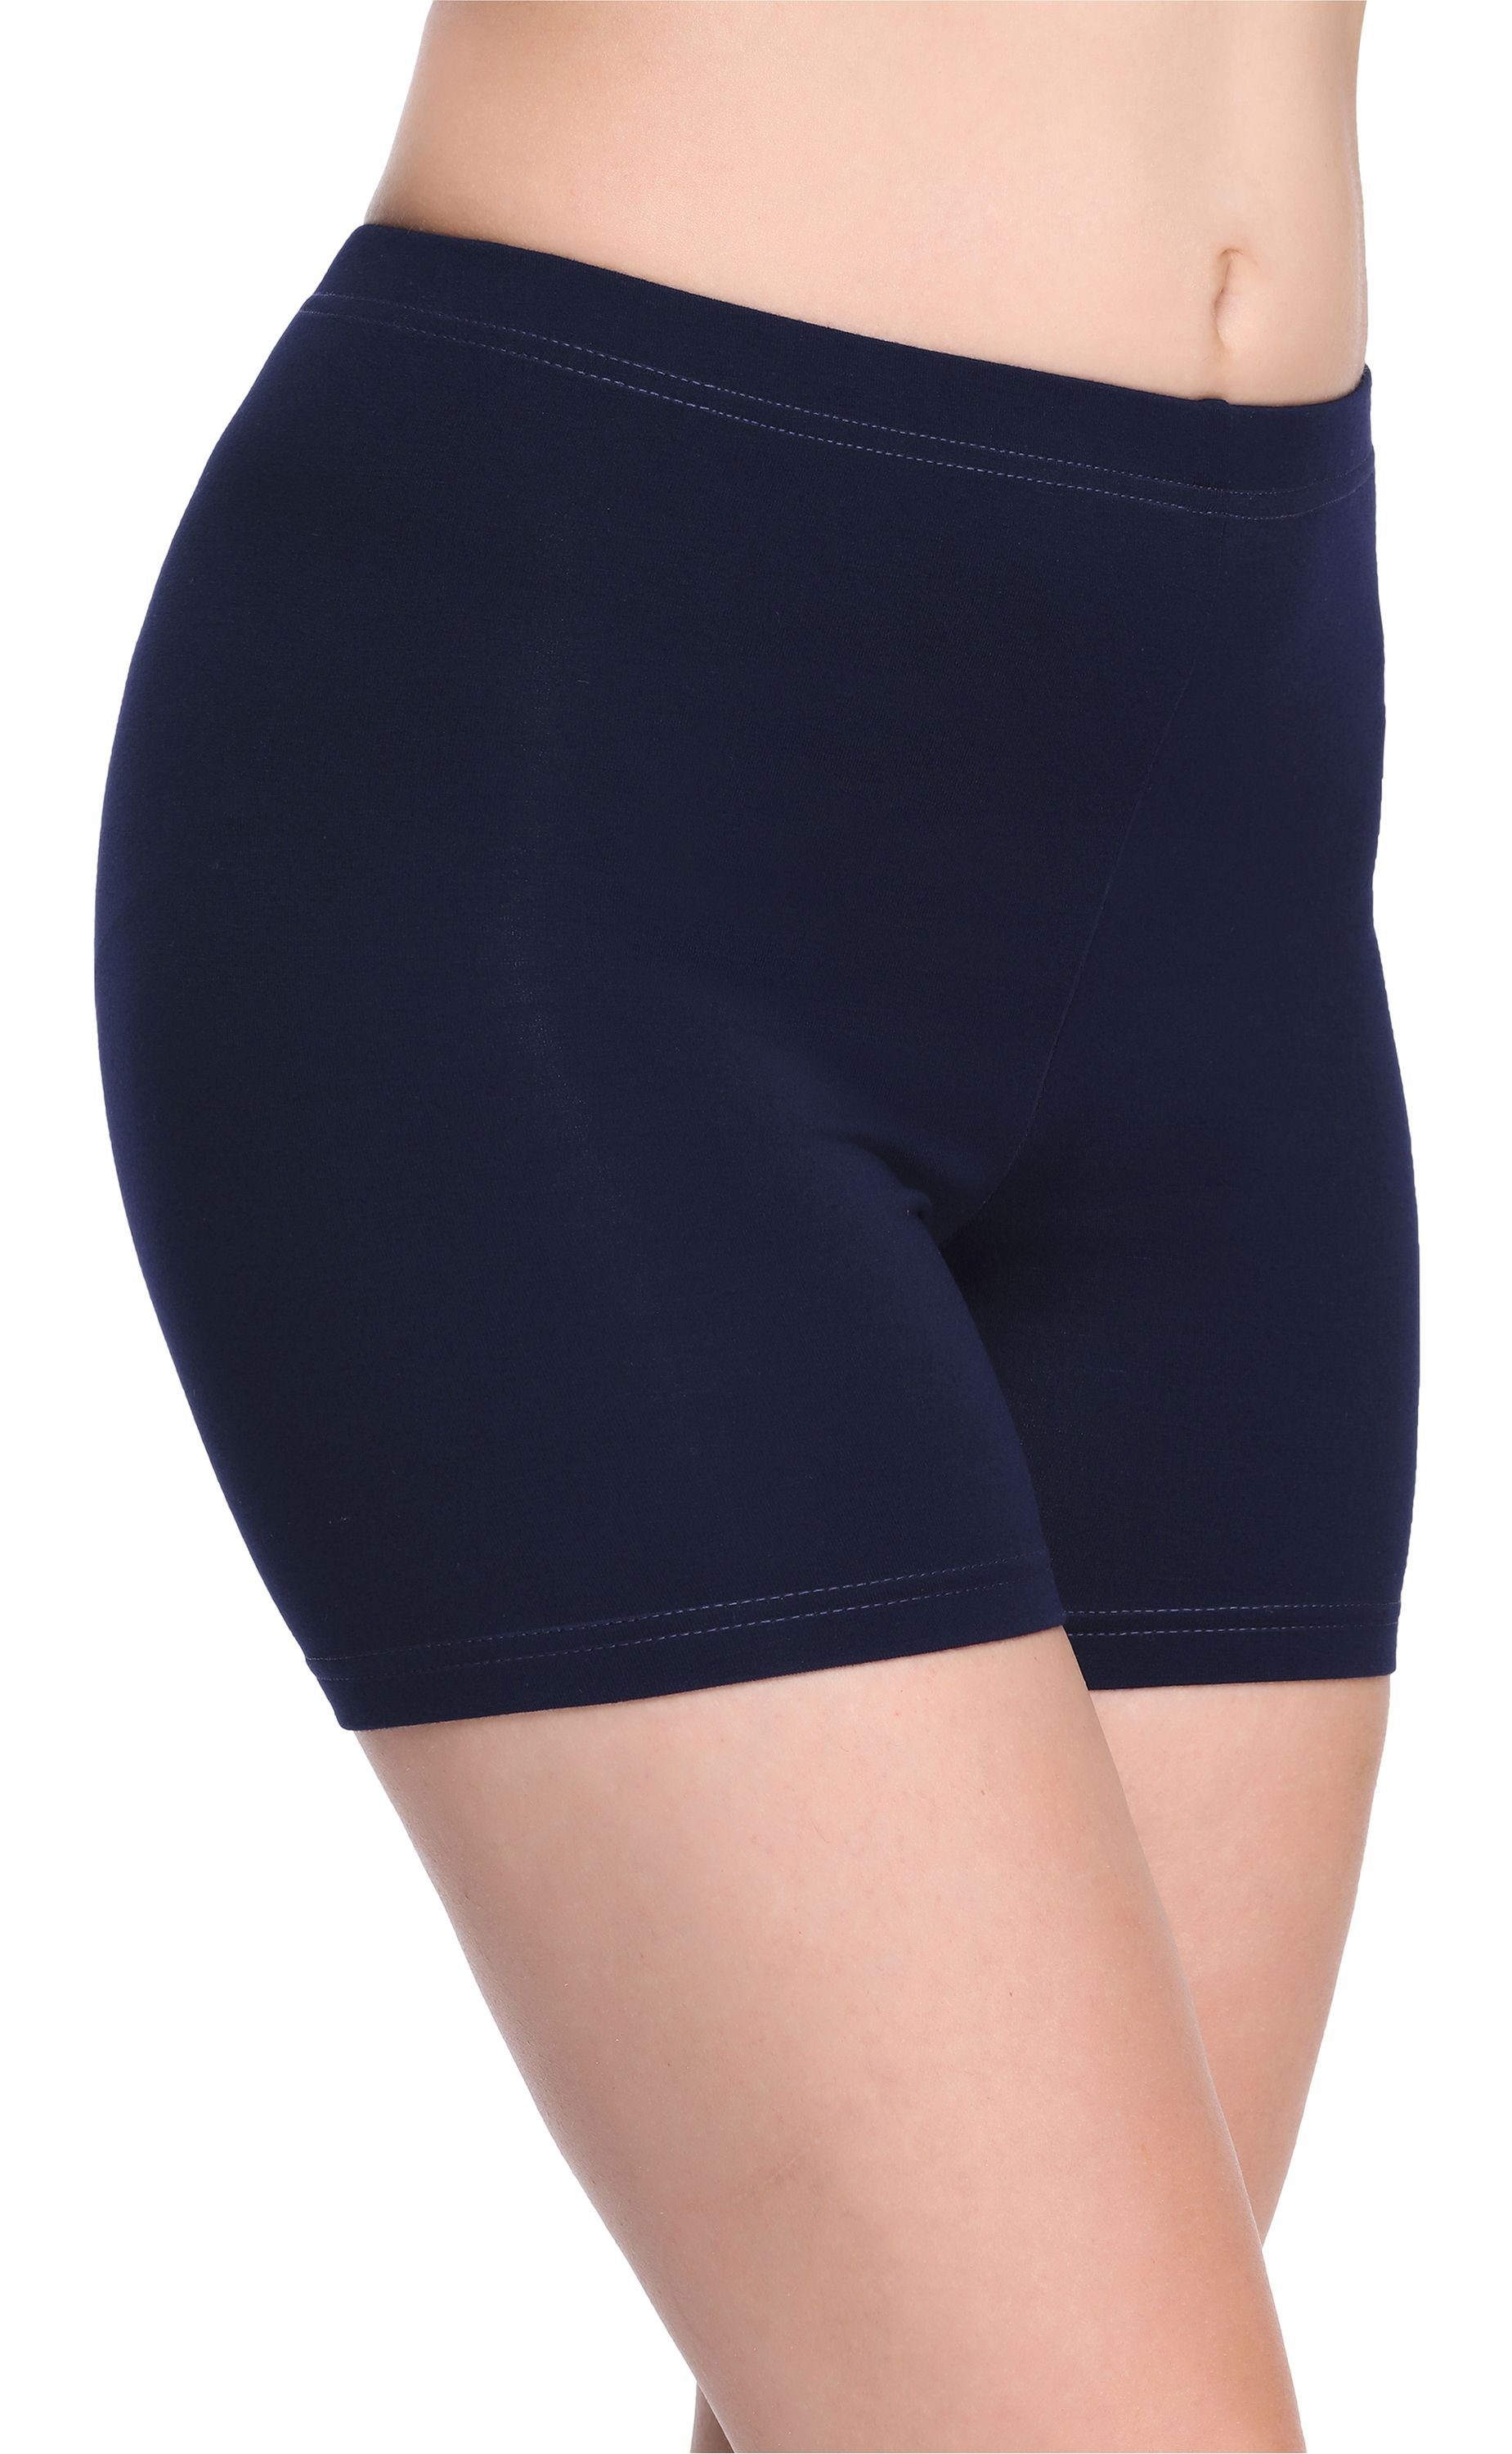 MS10-283 (1-tlg) Style Boxershorts Bund Radlerhose Shorts Merry elastischer Unterhose Marineblau Leggings Damen Hotpants